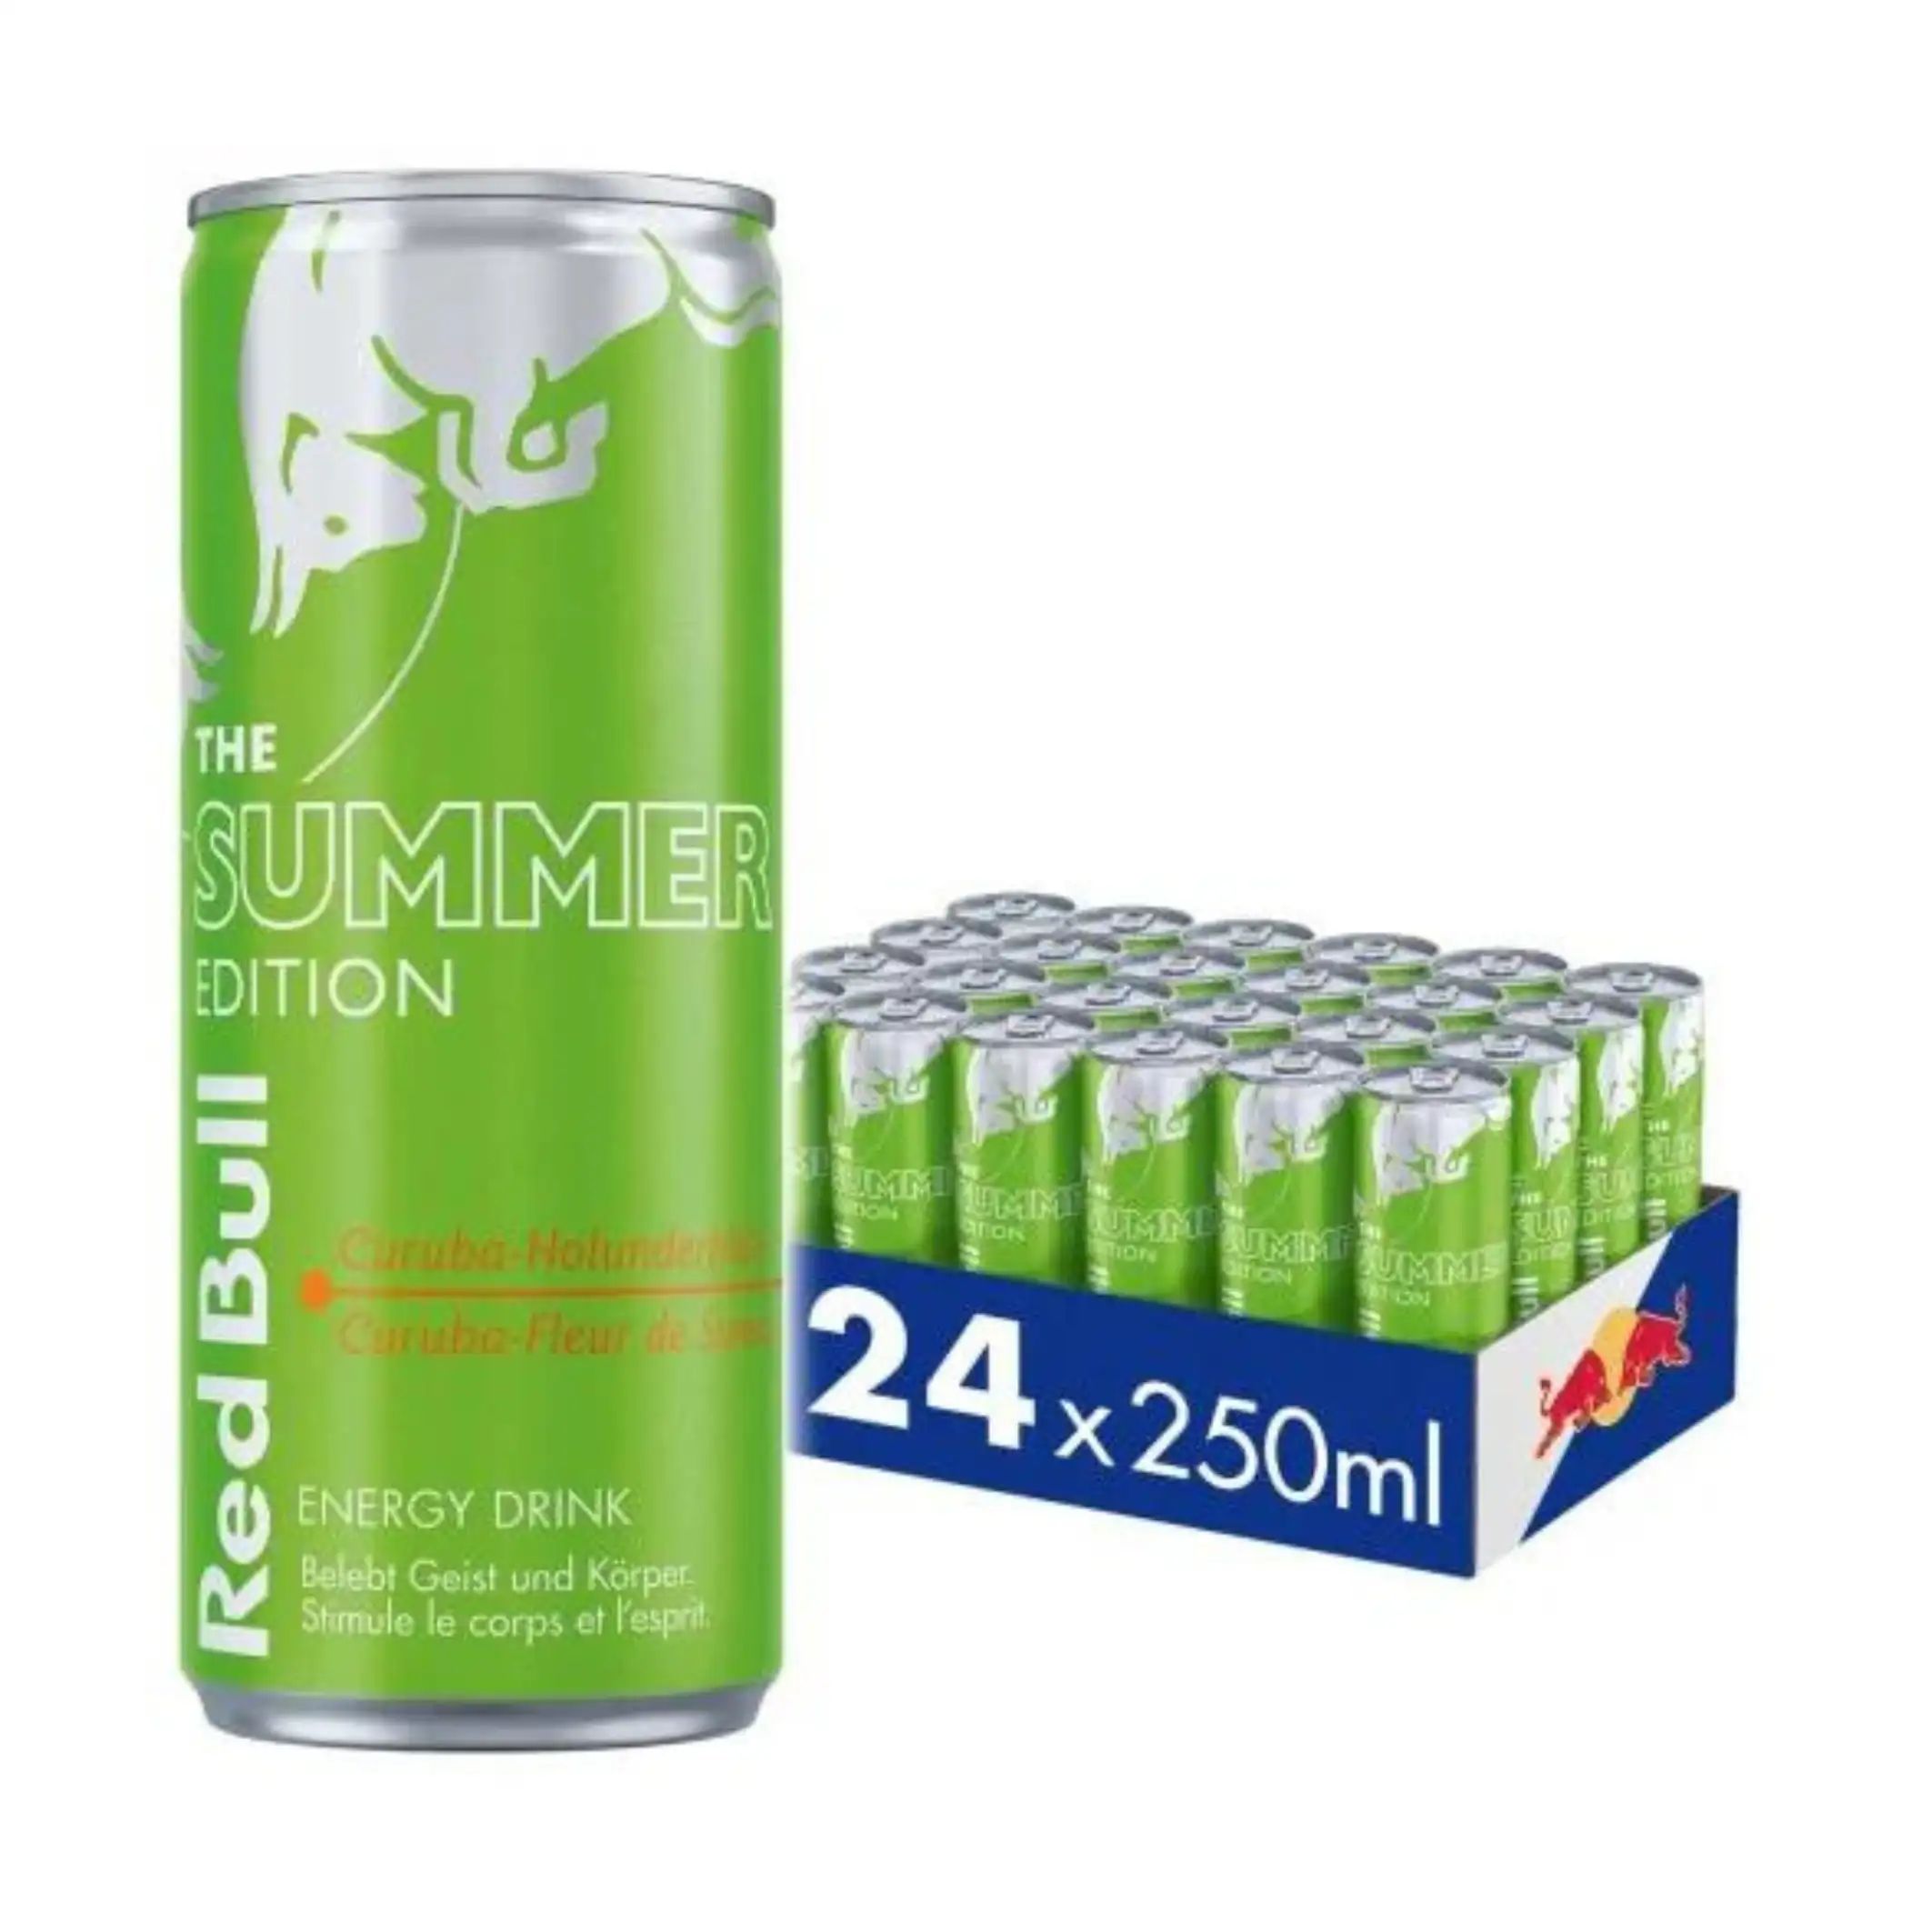 Red Bull Summer Edition Curuba-Holunder, 250 ml (24 x 250 ml)